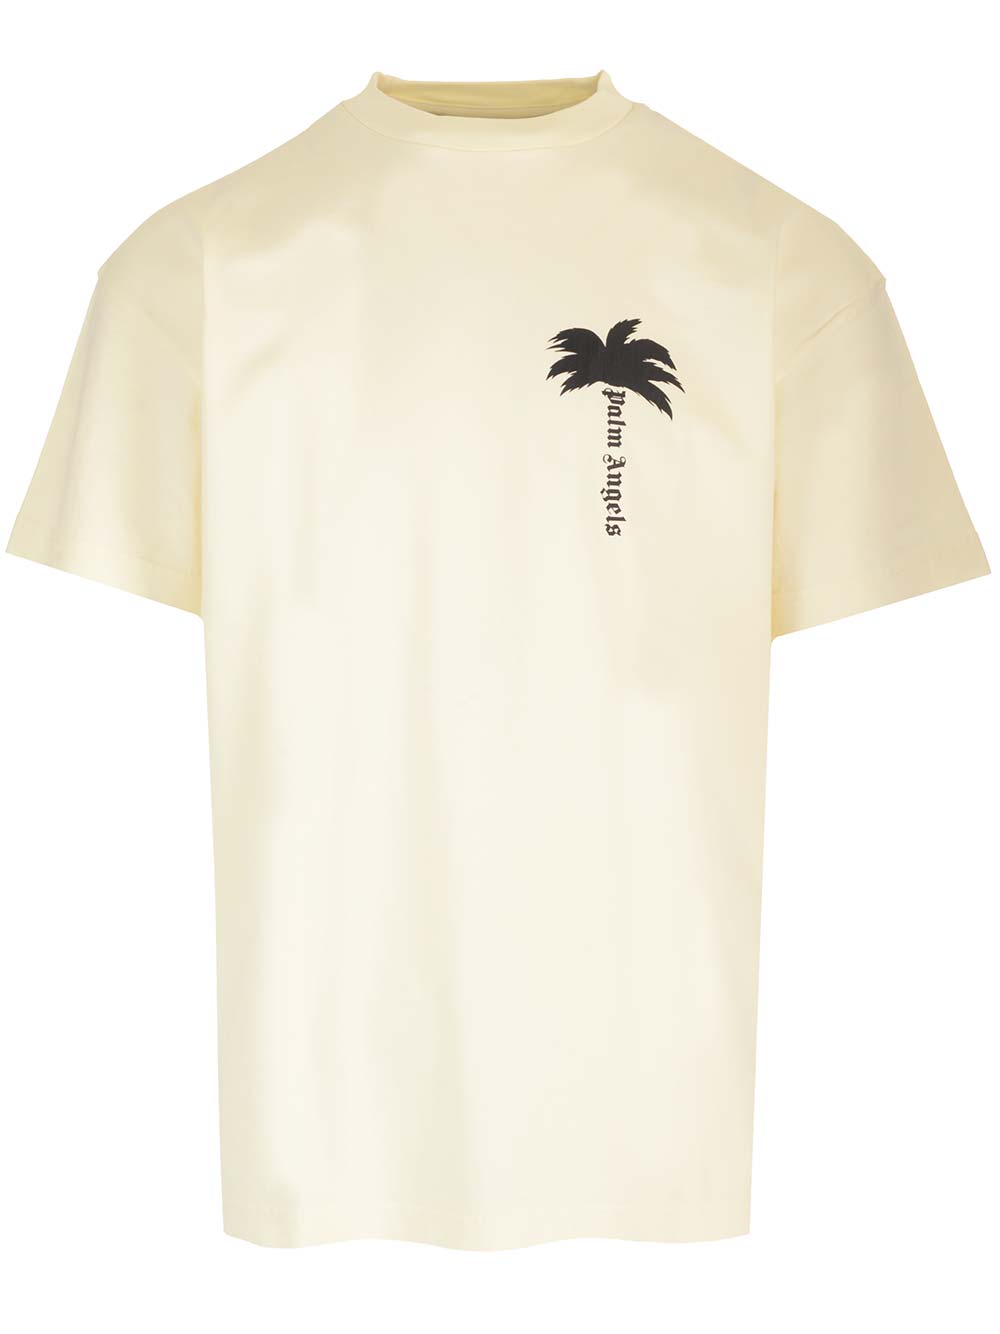 The Palm T-shirt